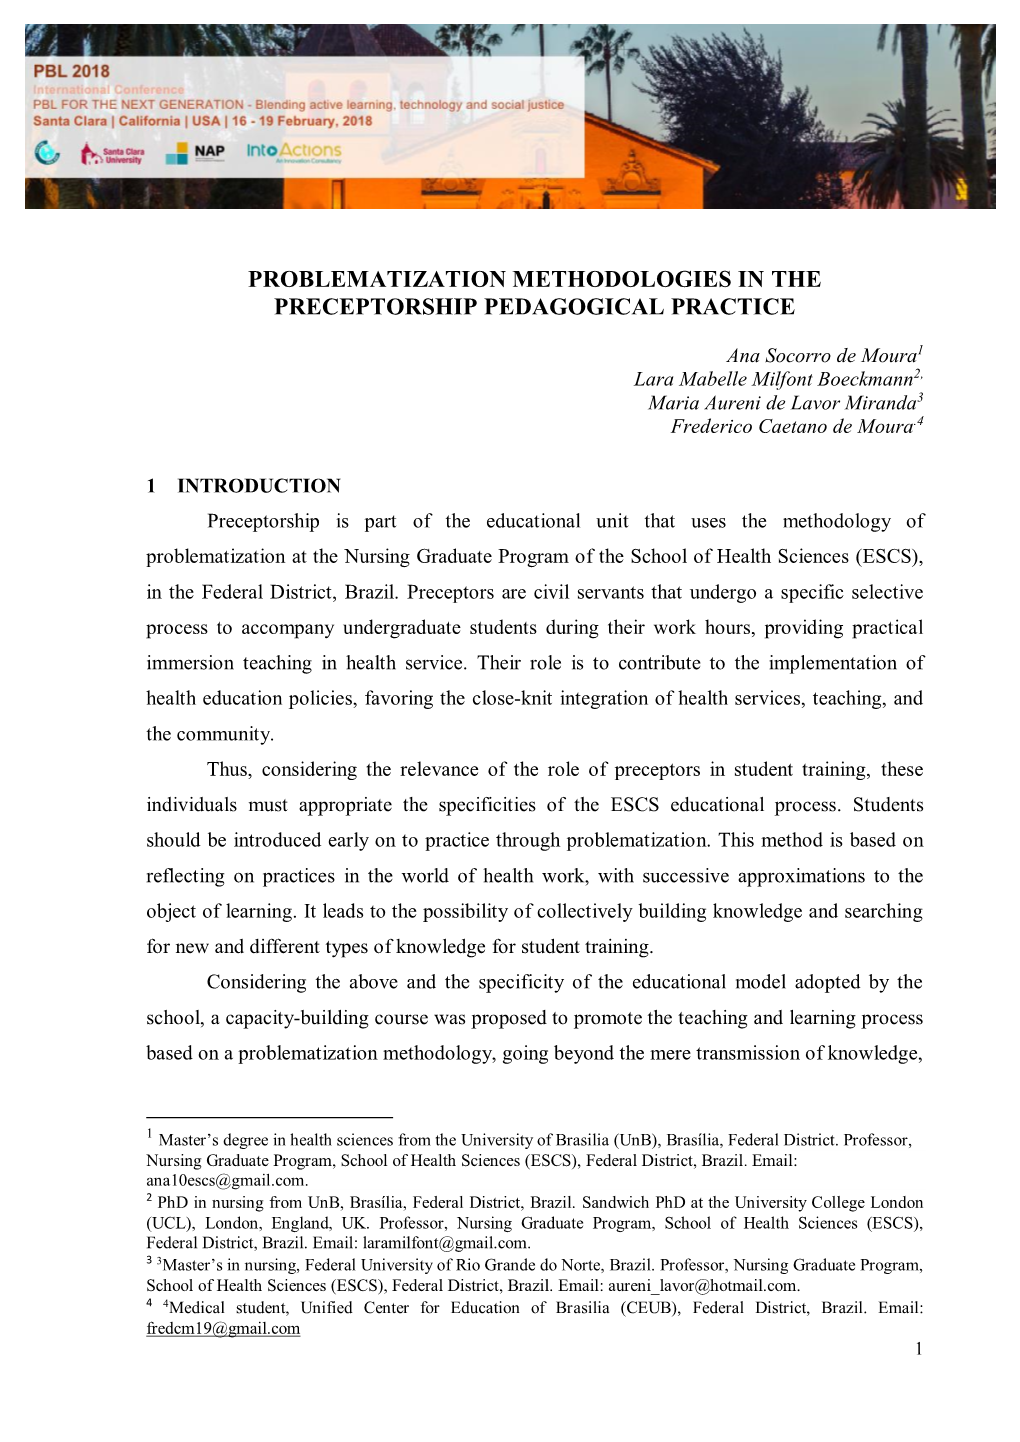 Problematization Methodologies in the Preceptorship Pedagogical Practice